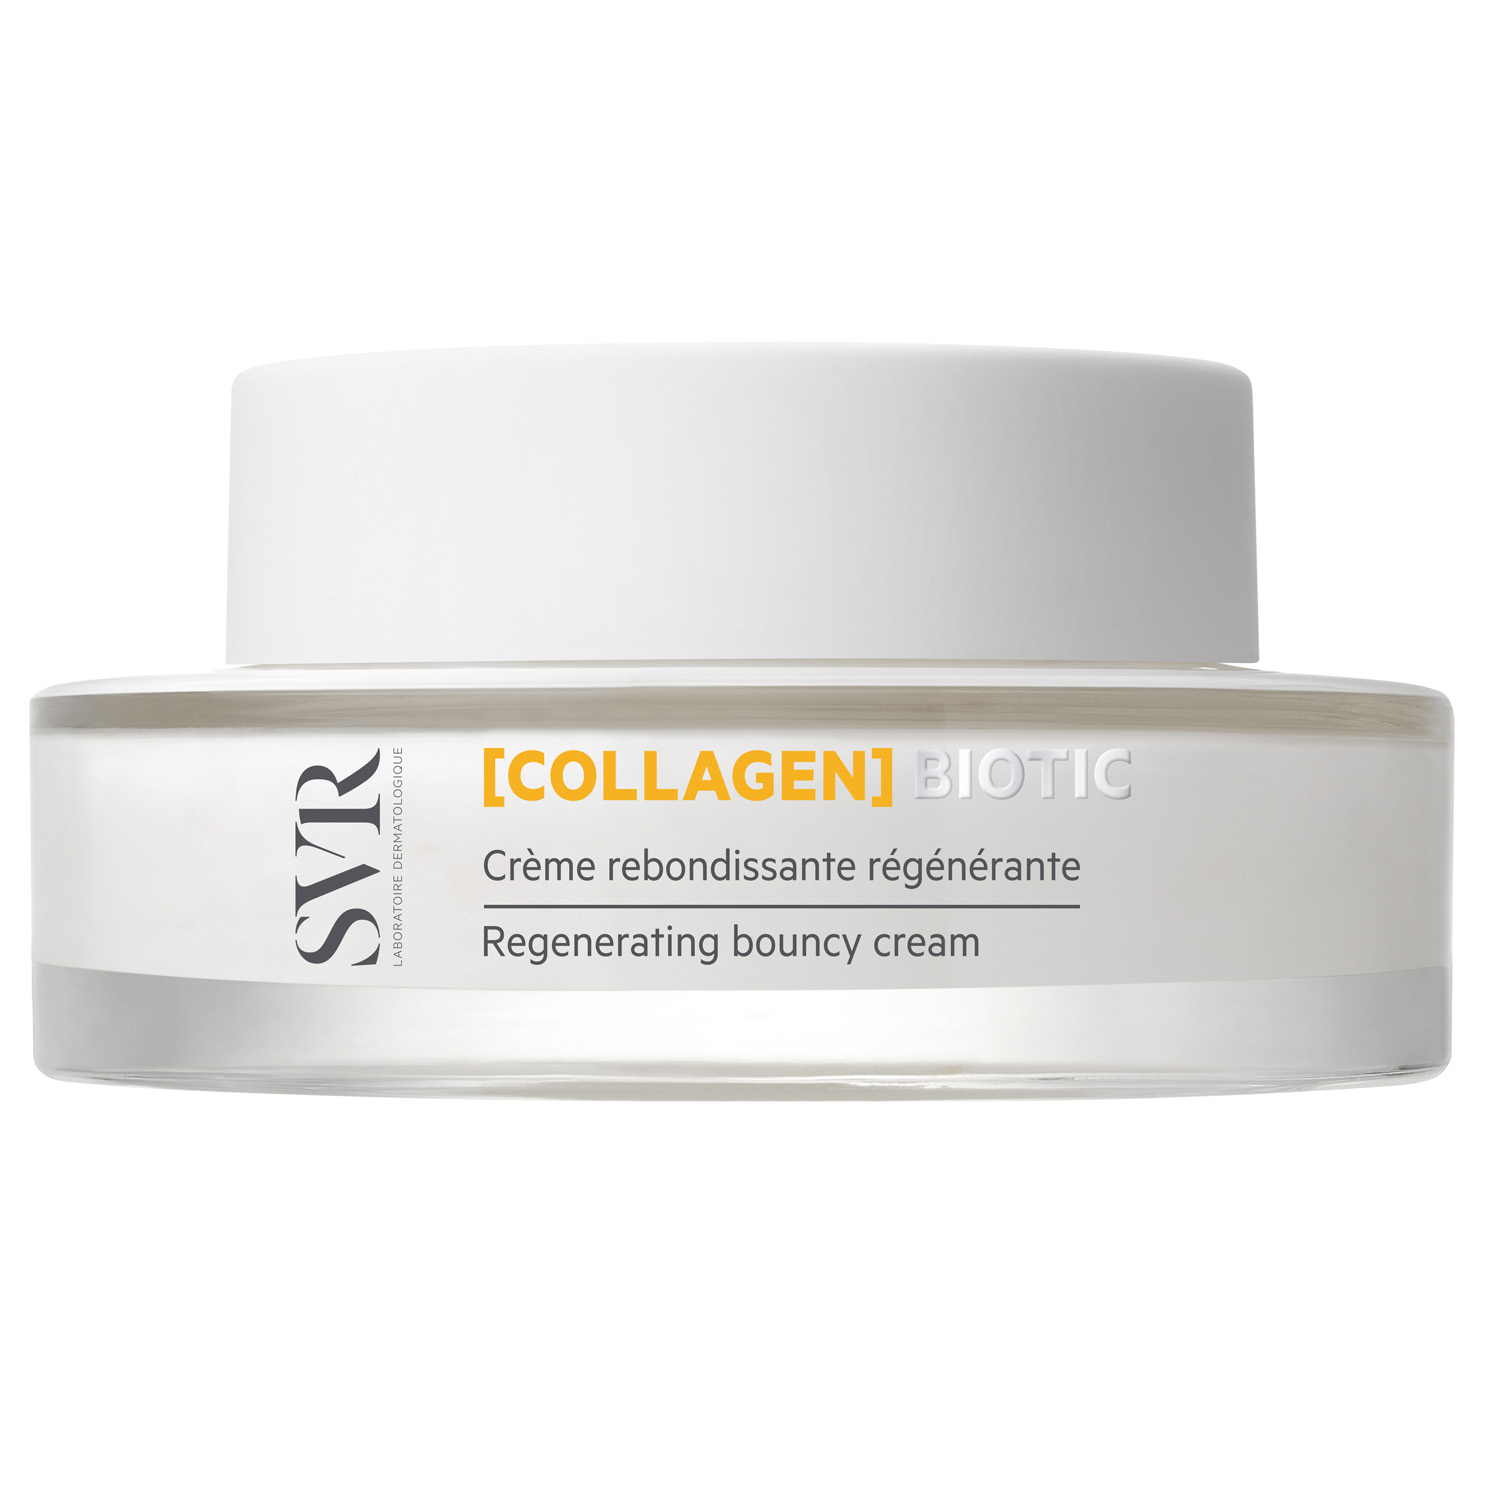 svr biotic [c20] восстанавливающий крем сияние 50 мл SVR Восстанавливающий крем [Collagen], 50 мл (SVR, Biotic)